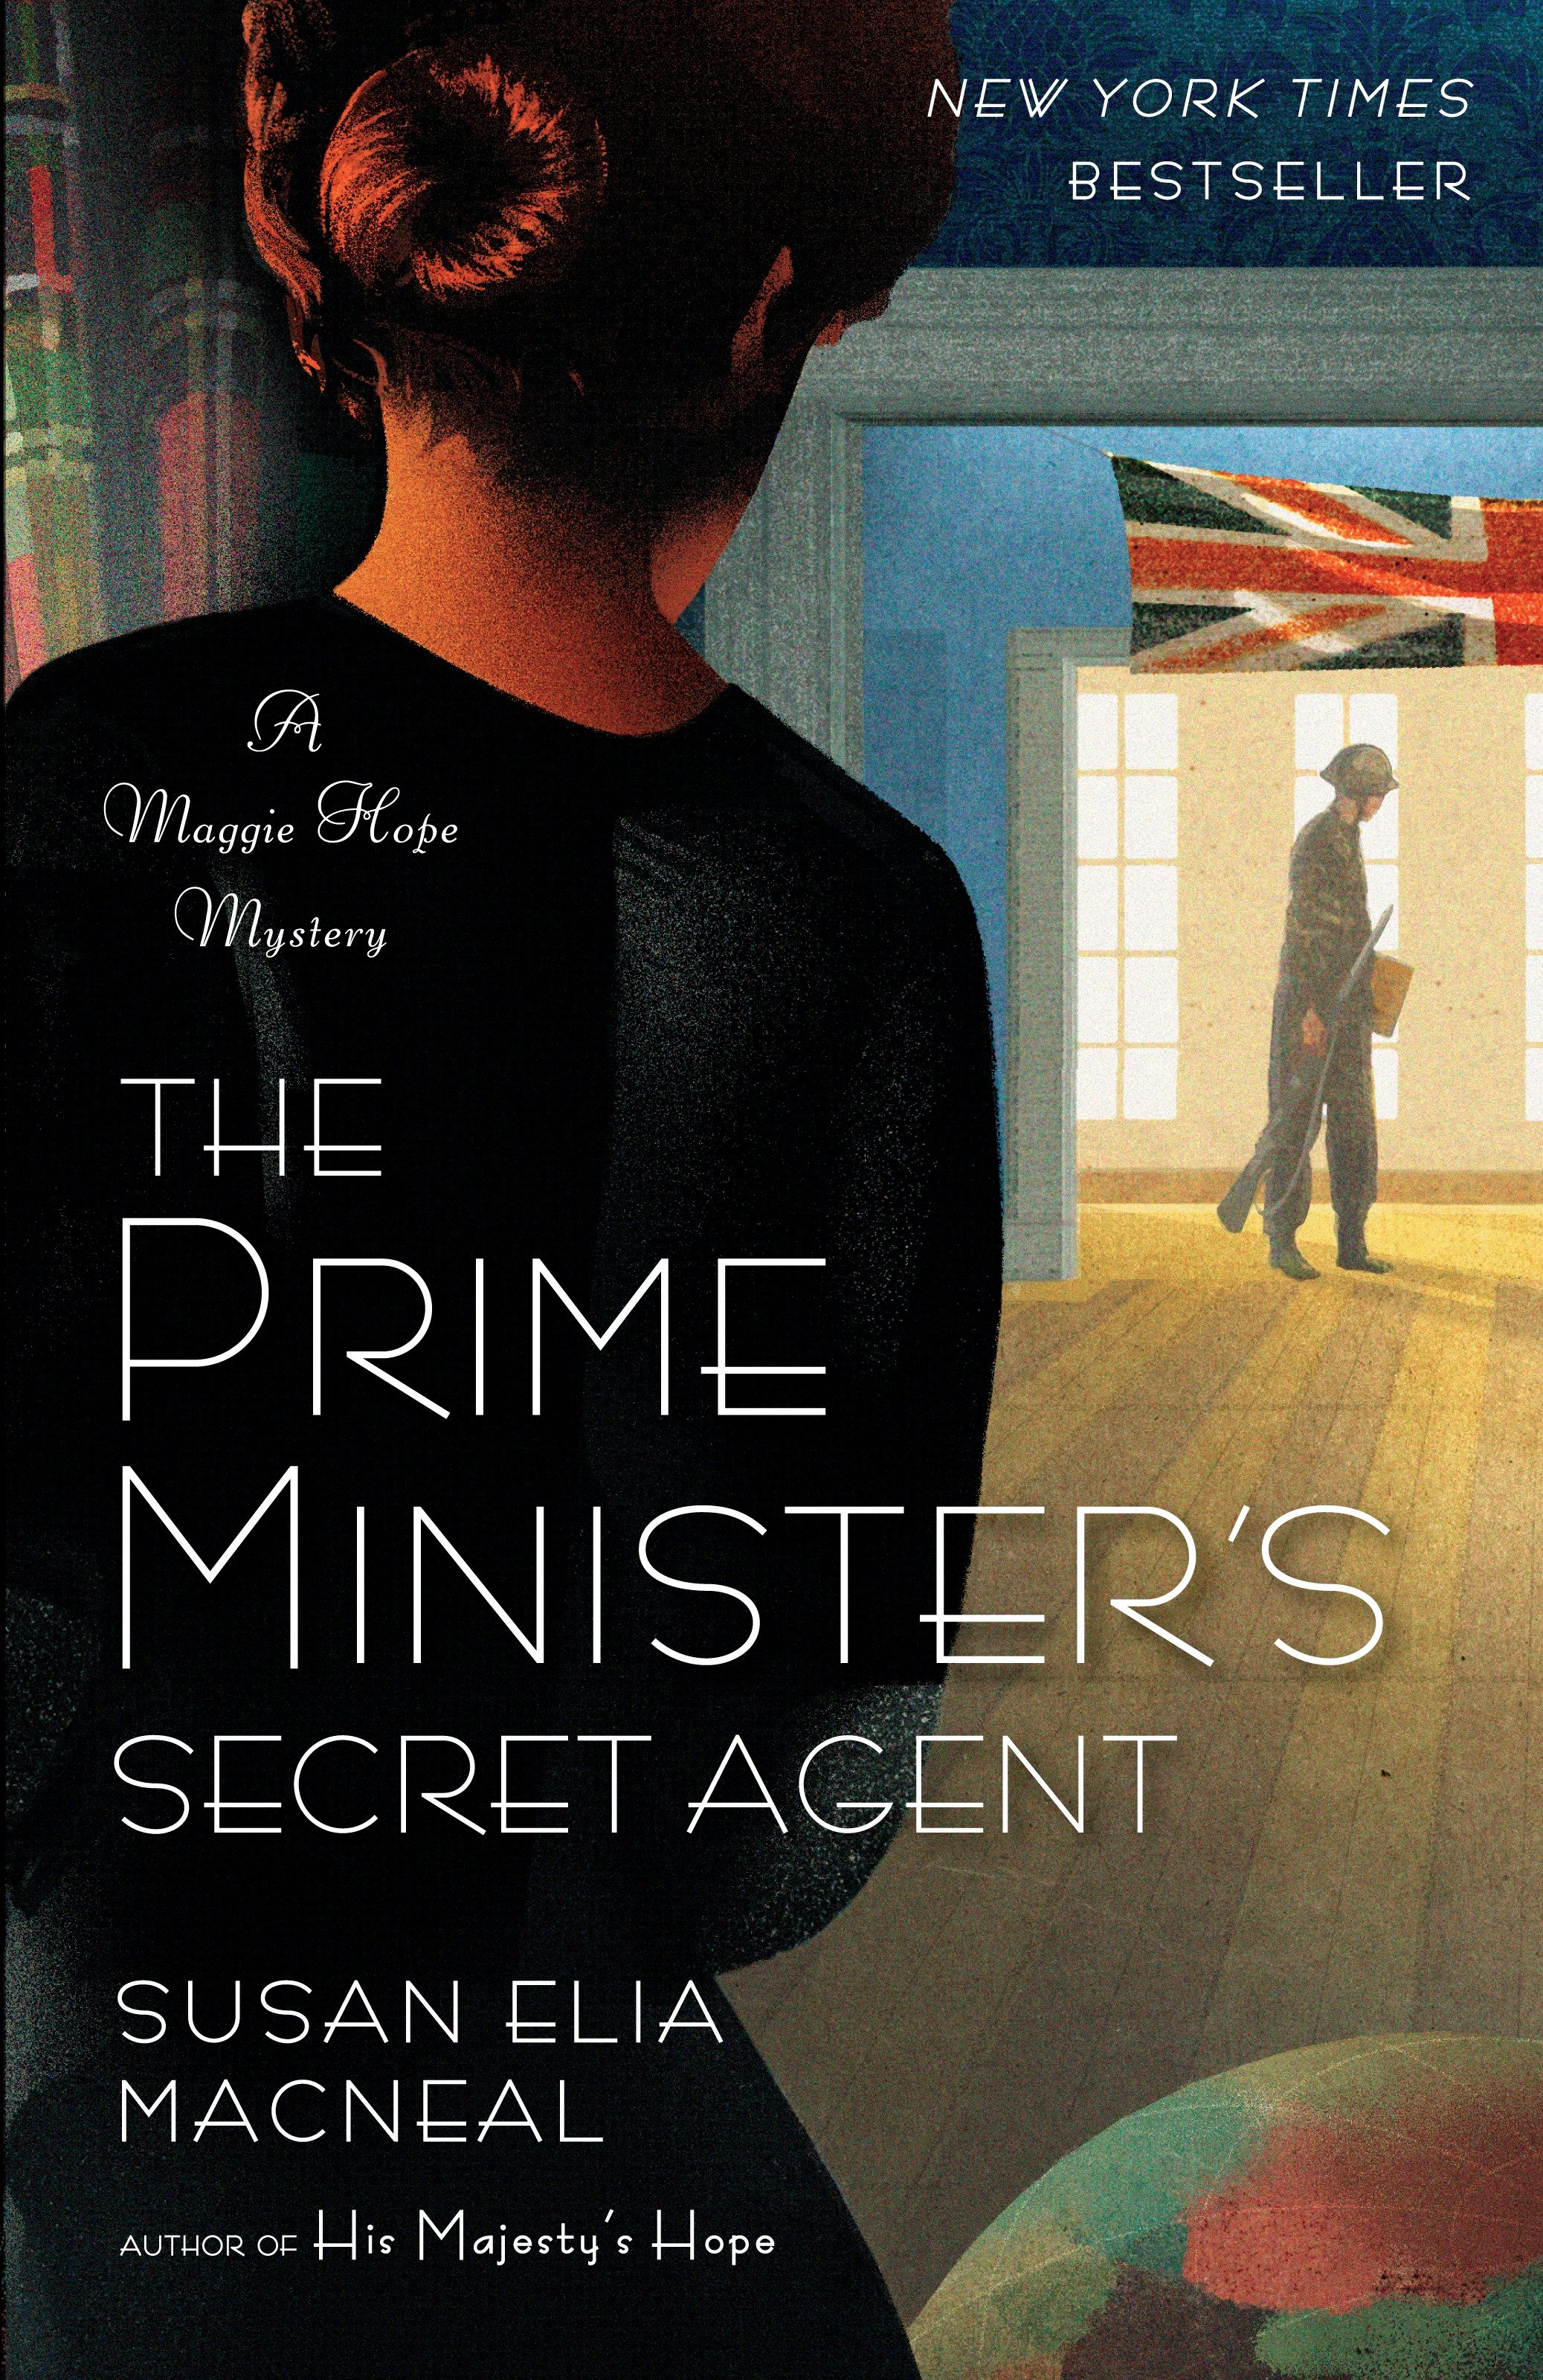 The Prime Minister's secret agent cover image